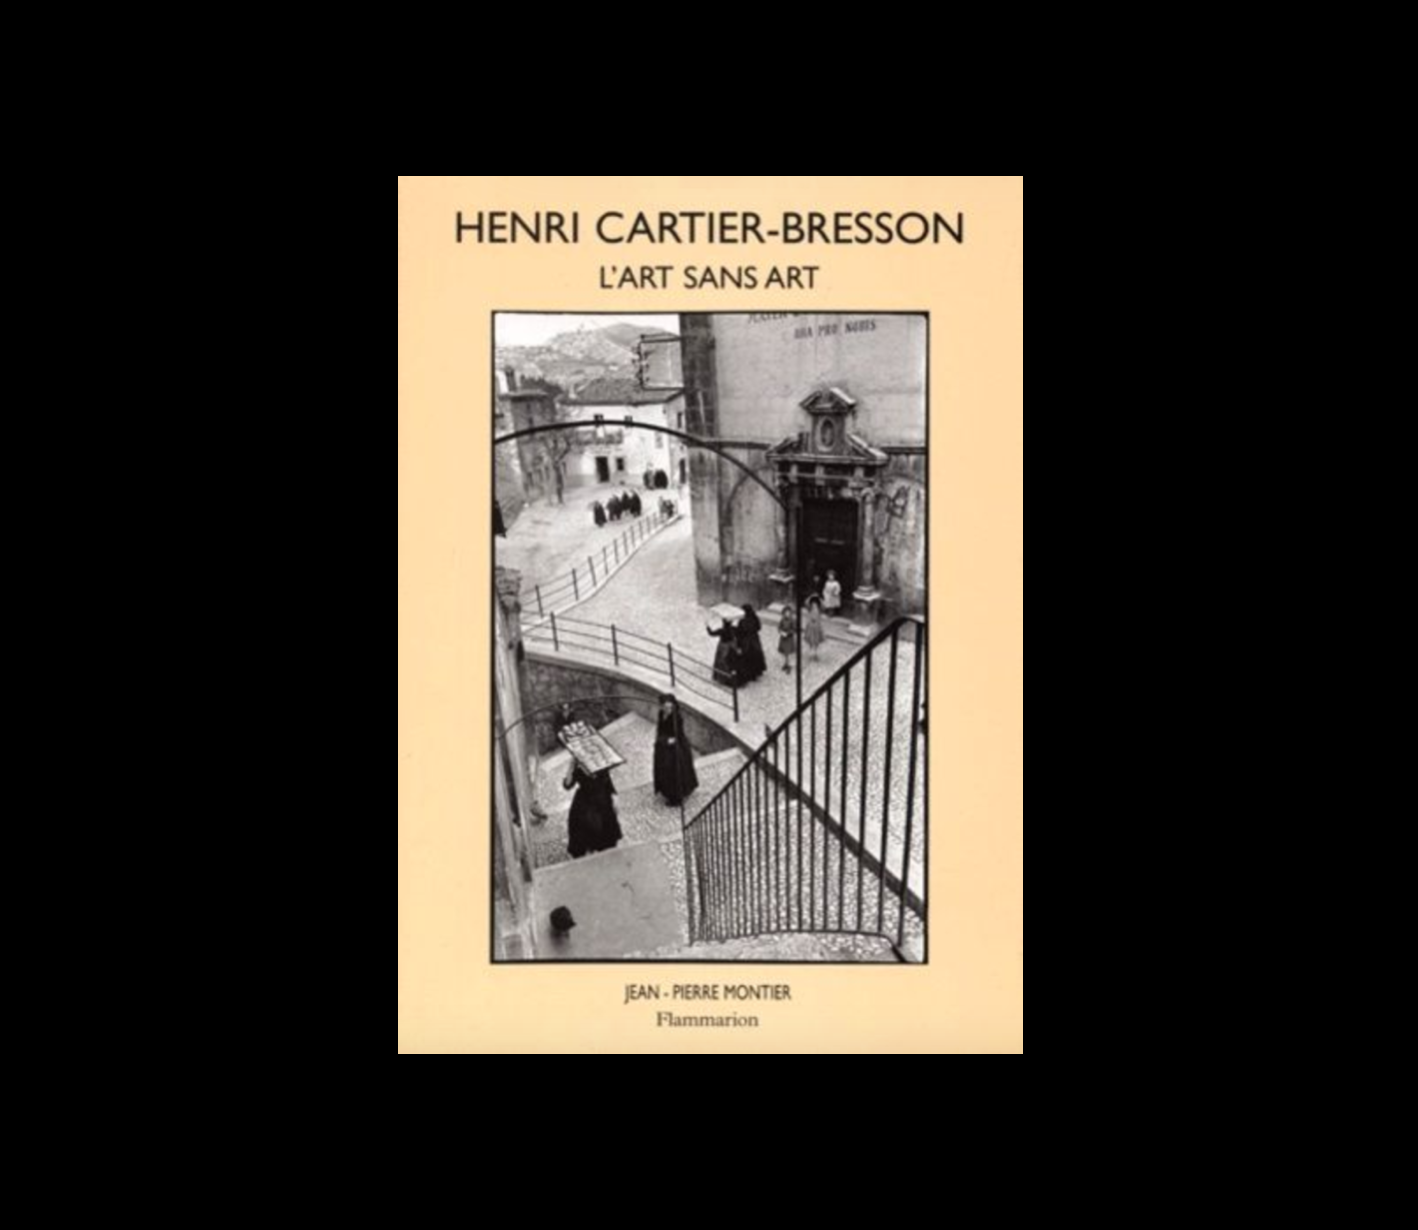 ART WITHOUT ART - Henri Cartier-Bresson